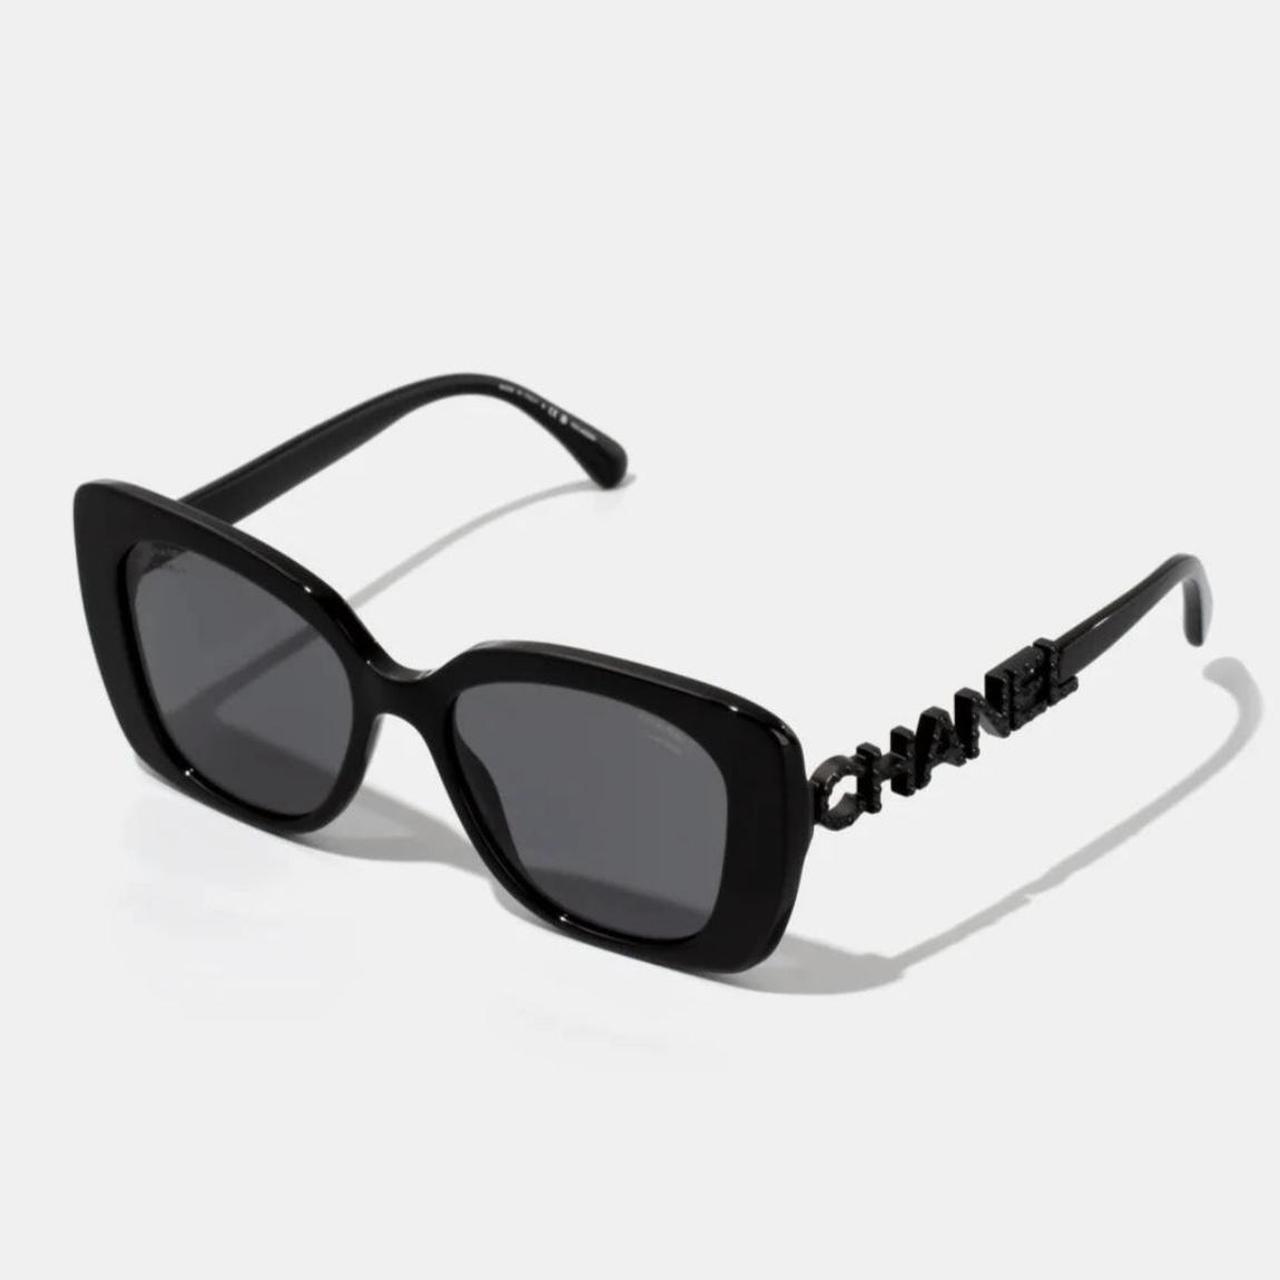 Chanel Women's Sunglasses - Black